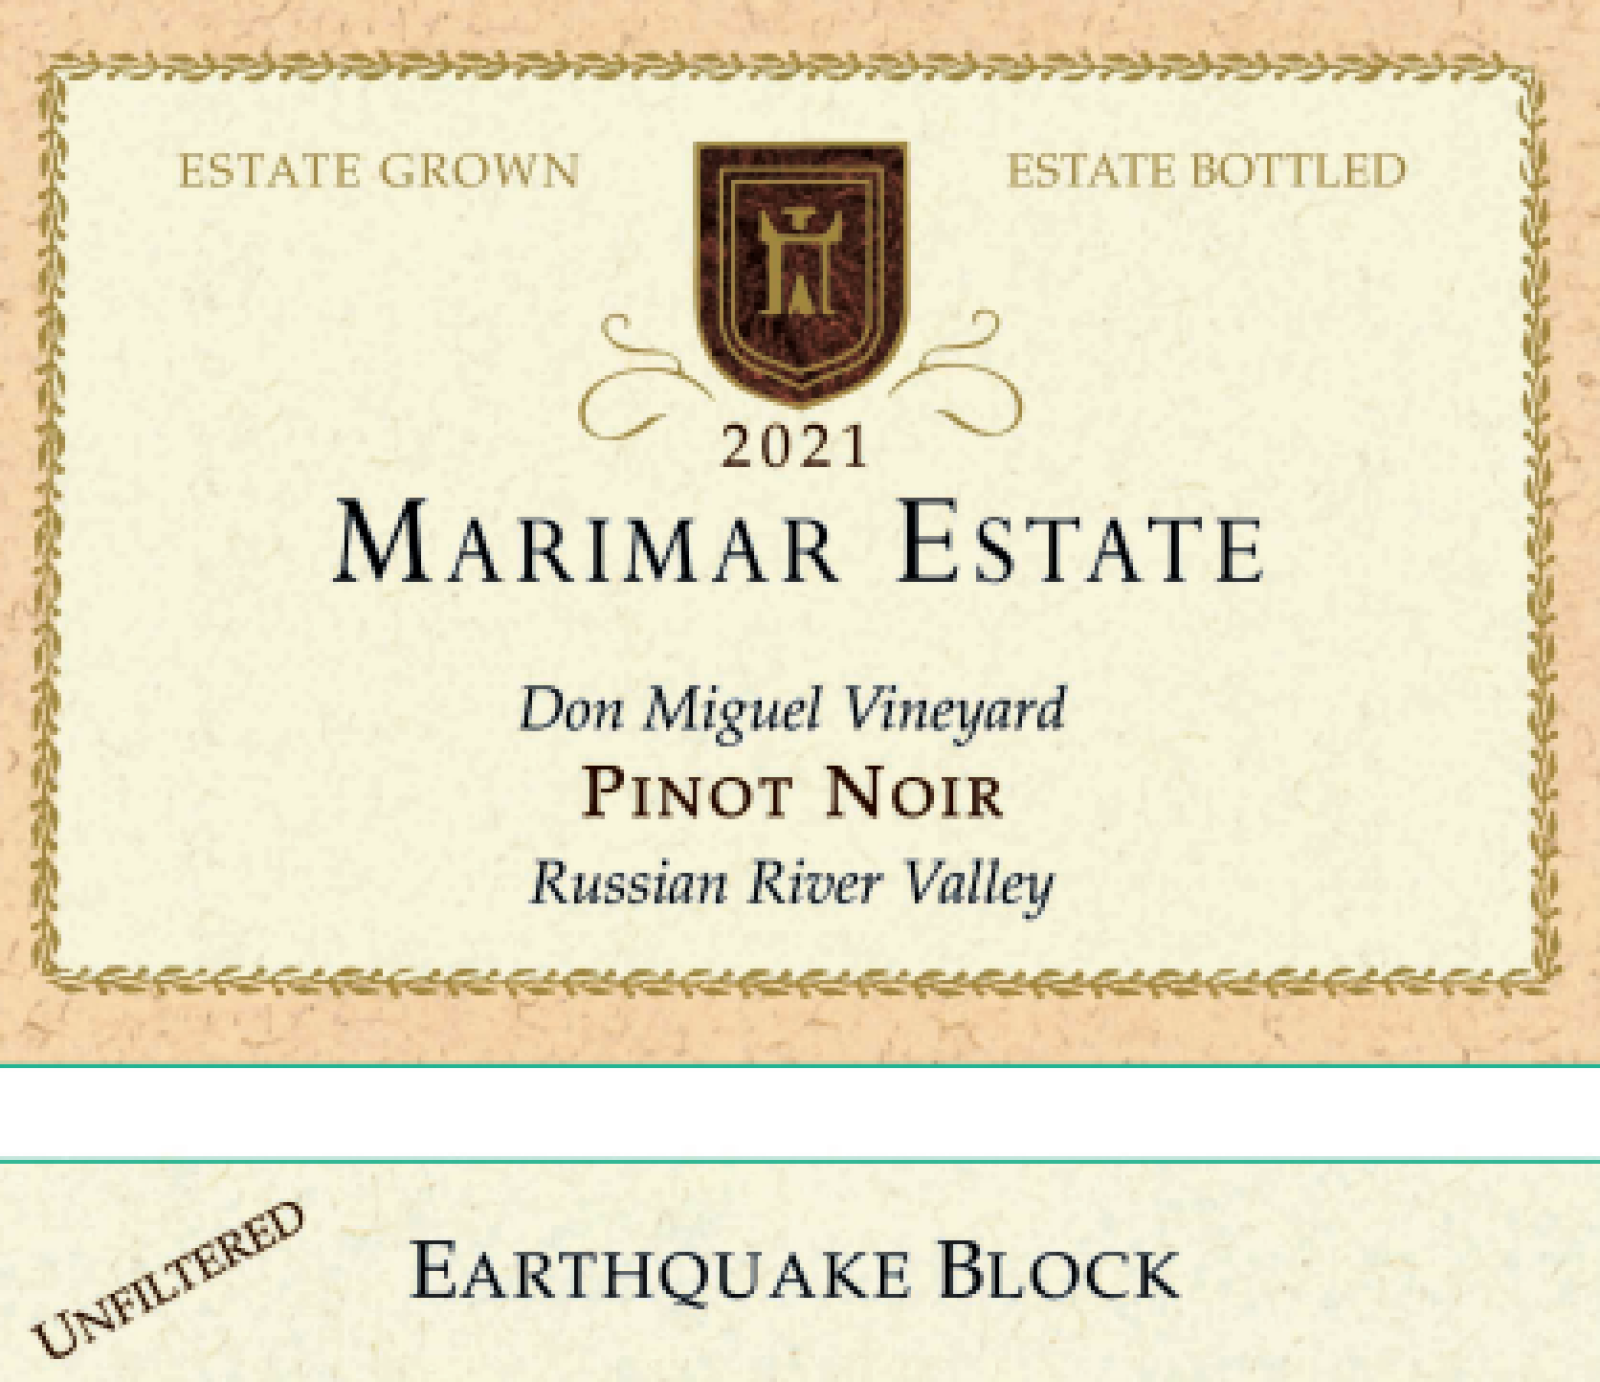 Marimar Earthquake Block Pinot Noir 2021